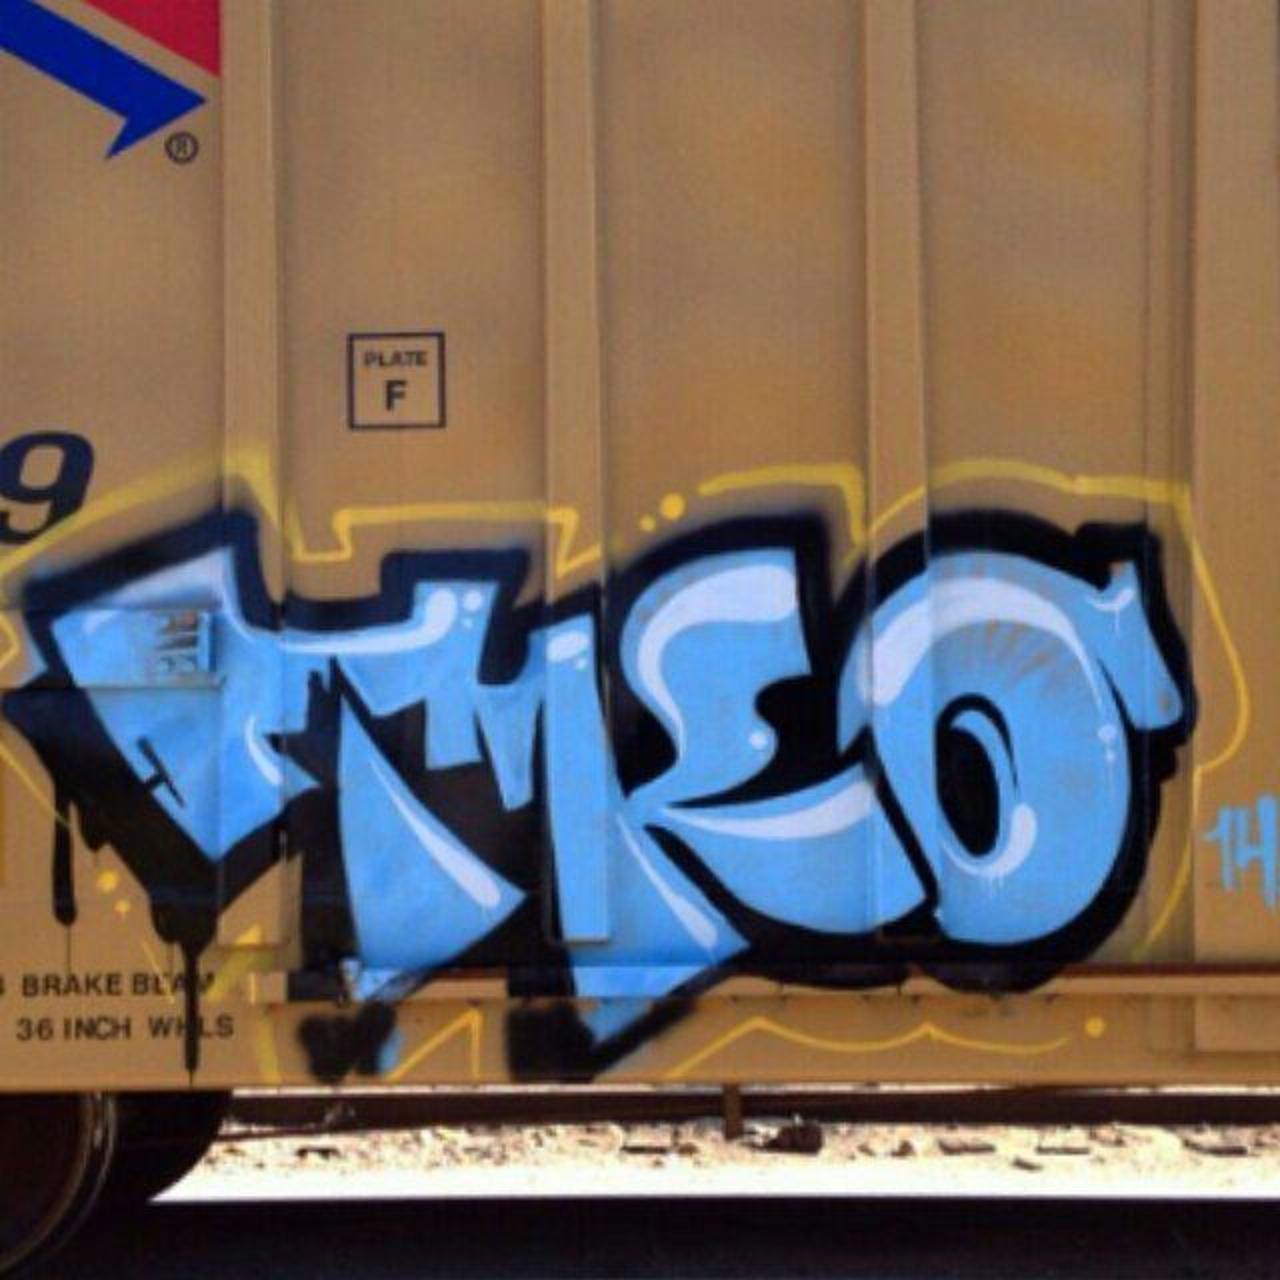 RT @artpushr: via #the_tko_krue "http://bit.ly/1GlzXGo" #graffiti #streetart https://t.co/BinO9NGx7c